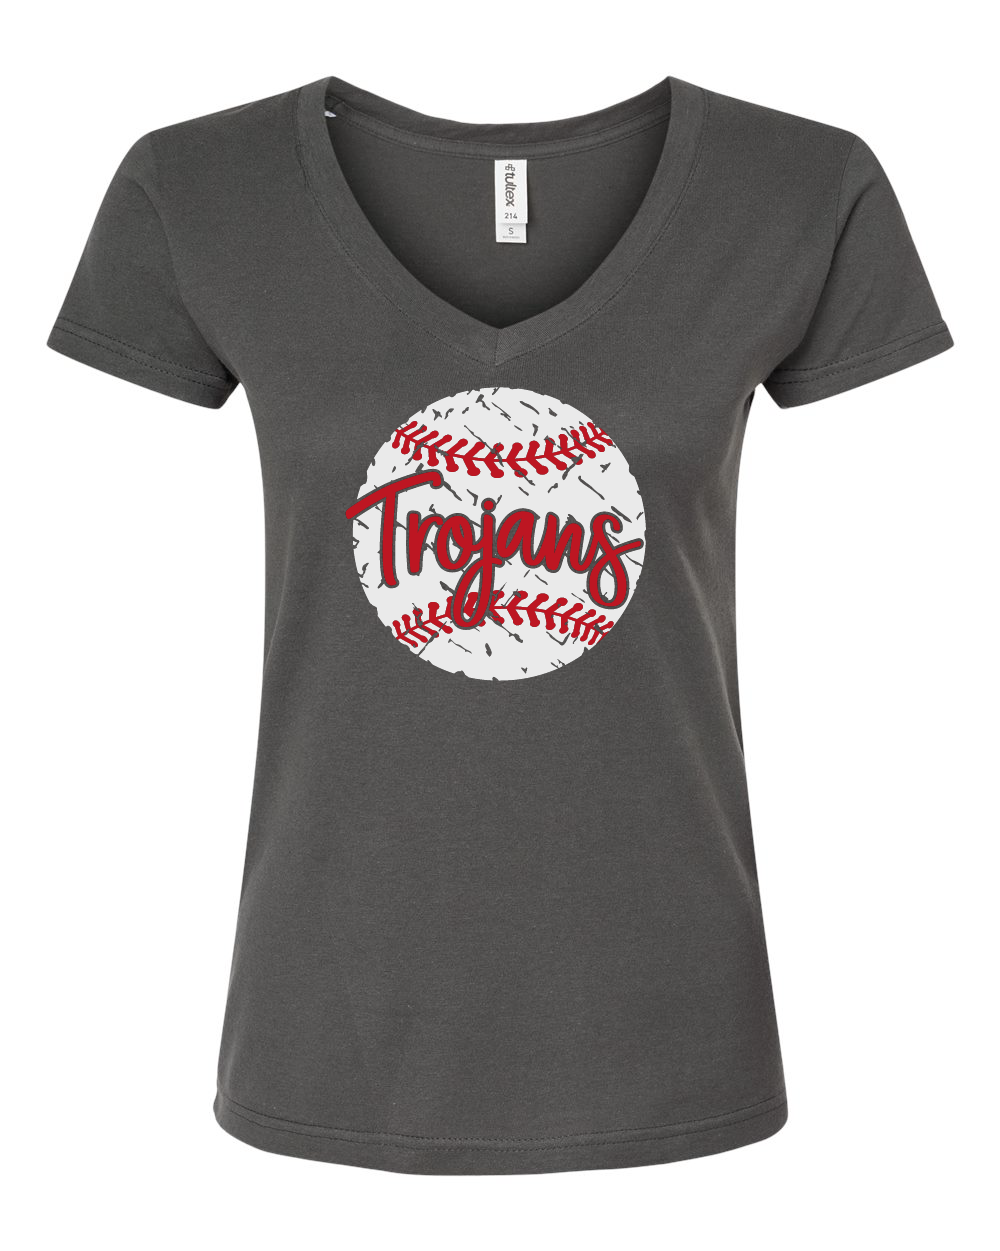 Trojans Baseball Shirt - CGB